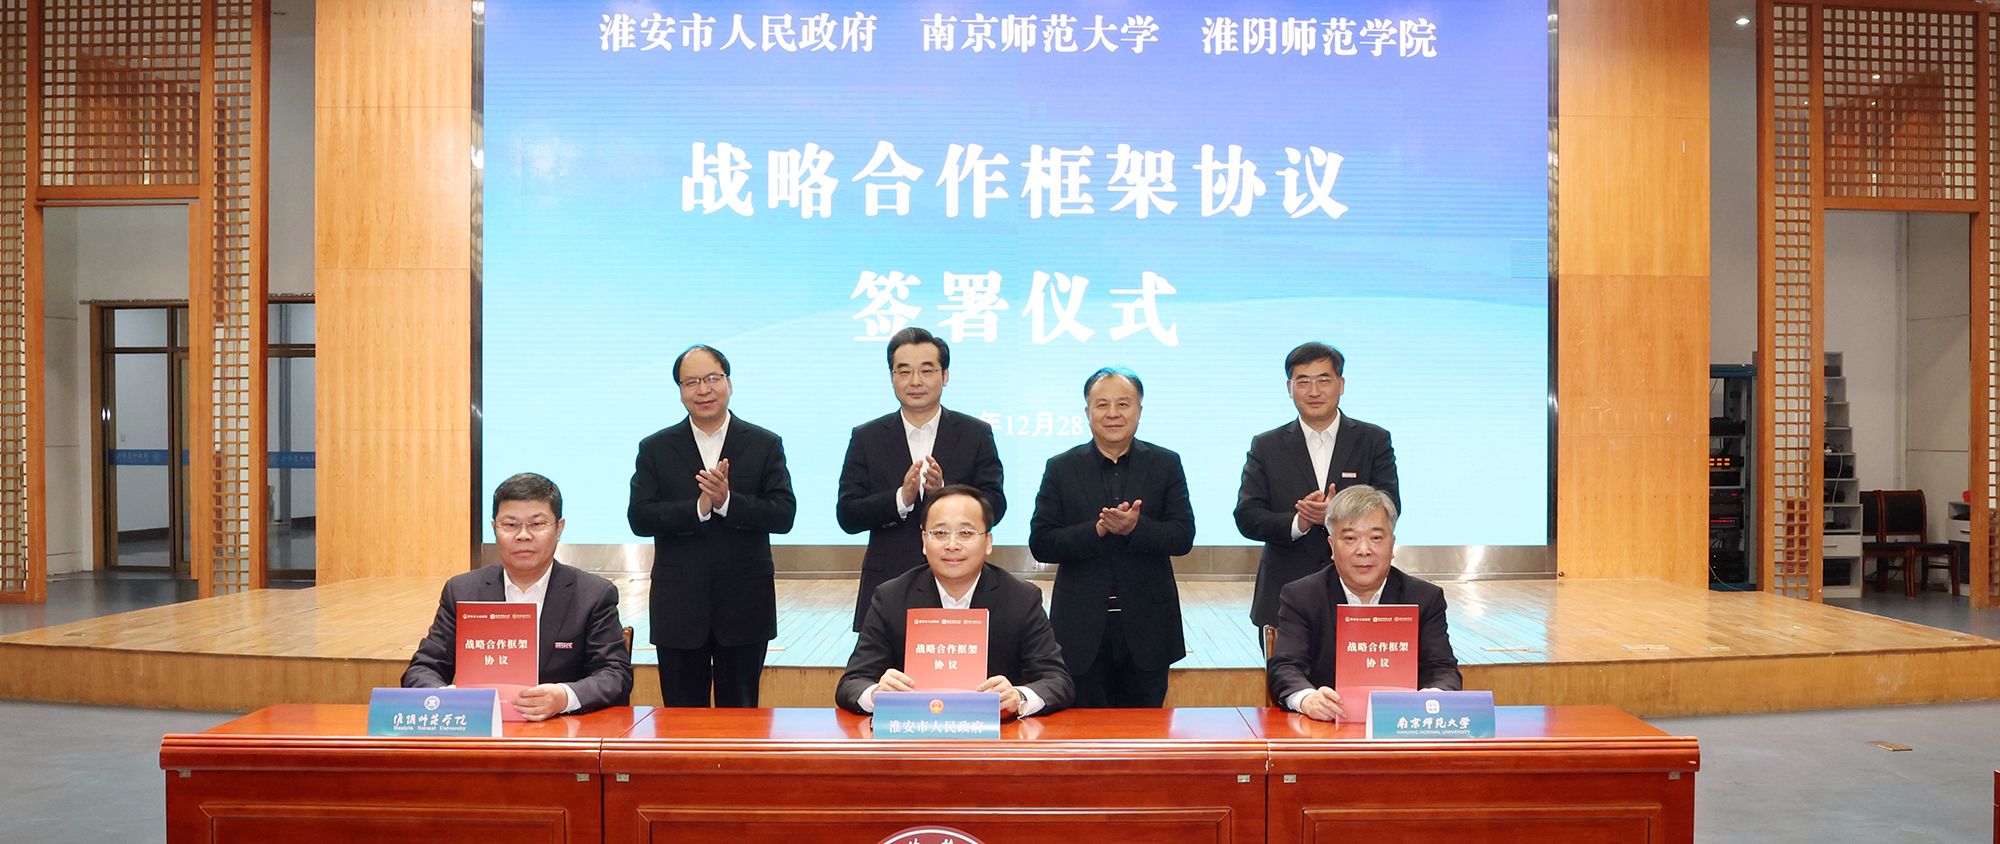 mg4355线路检测官网与淮安市人民政府、南京师范大学签署战略合作框架协议